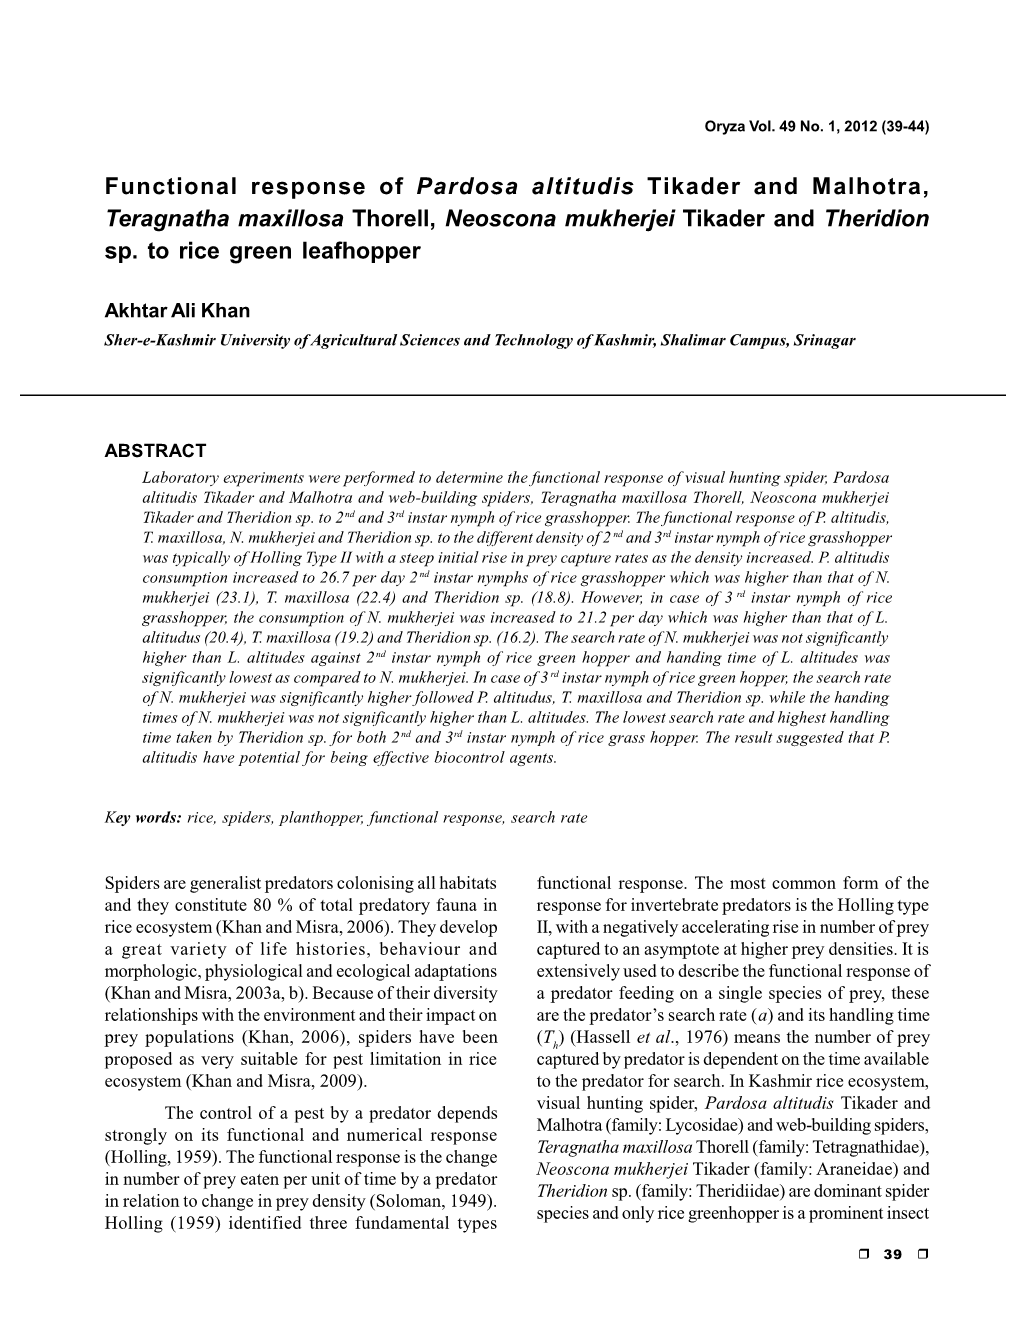 Functional Response of Pardosa Altitudis Tikader and Malhotra, Teragnatha Maxillosa Thorell, Neoscona Mukherjei Tikader and Theridion Sp